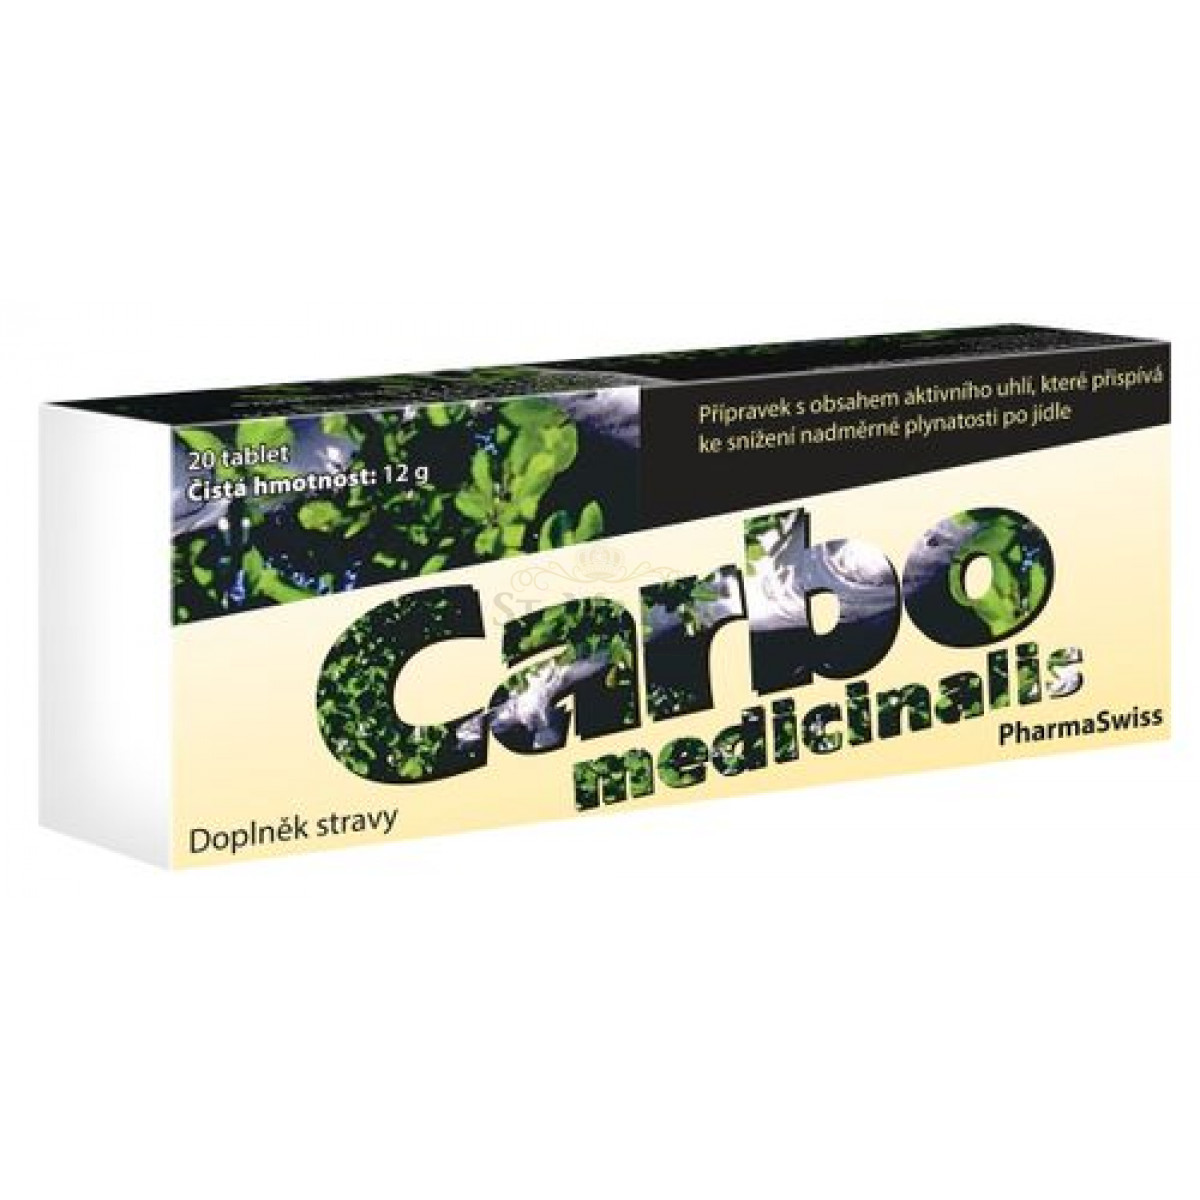 Carbo medicinalis PharmaSwiss - 20 tablet